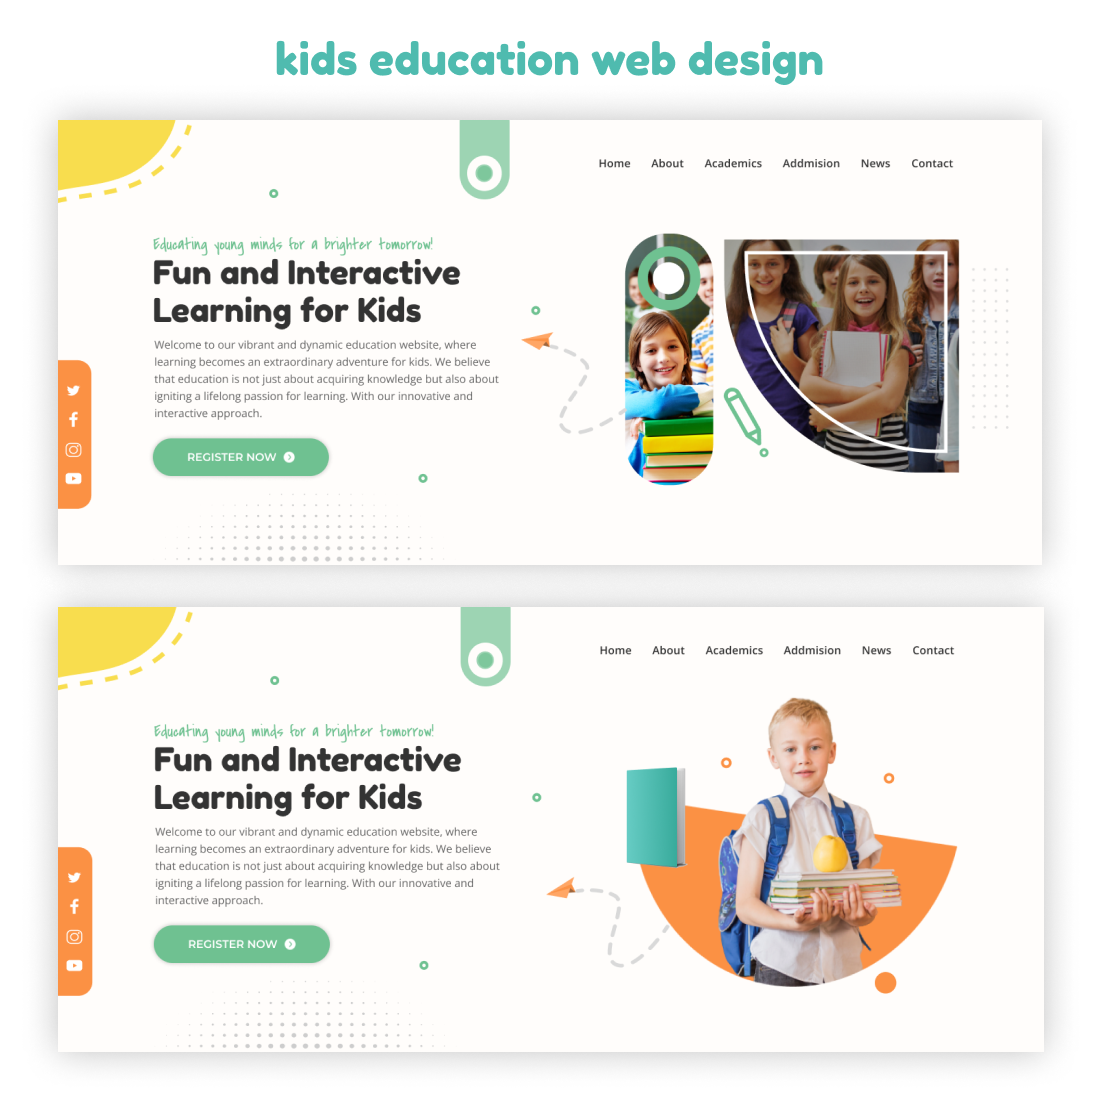 Creative Kids Education Web Design cover image.